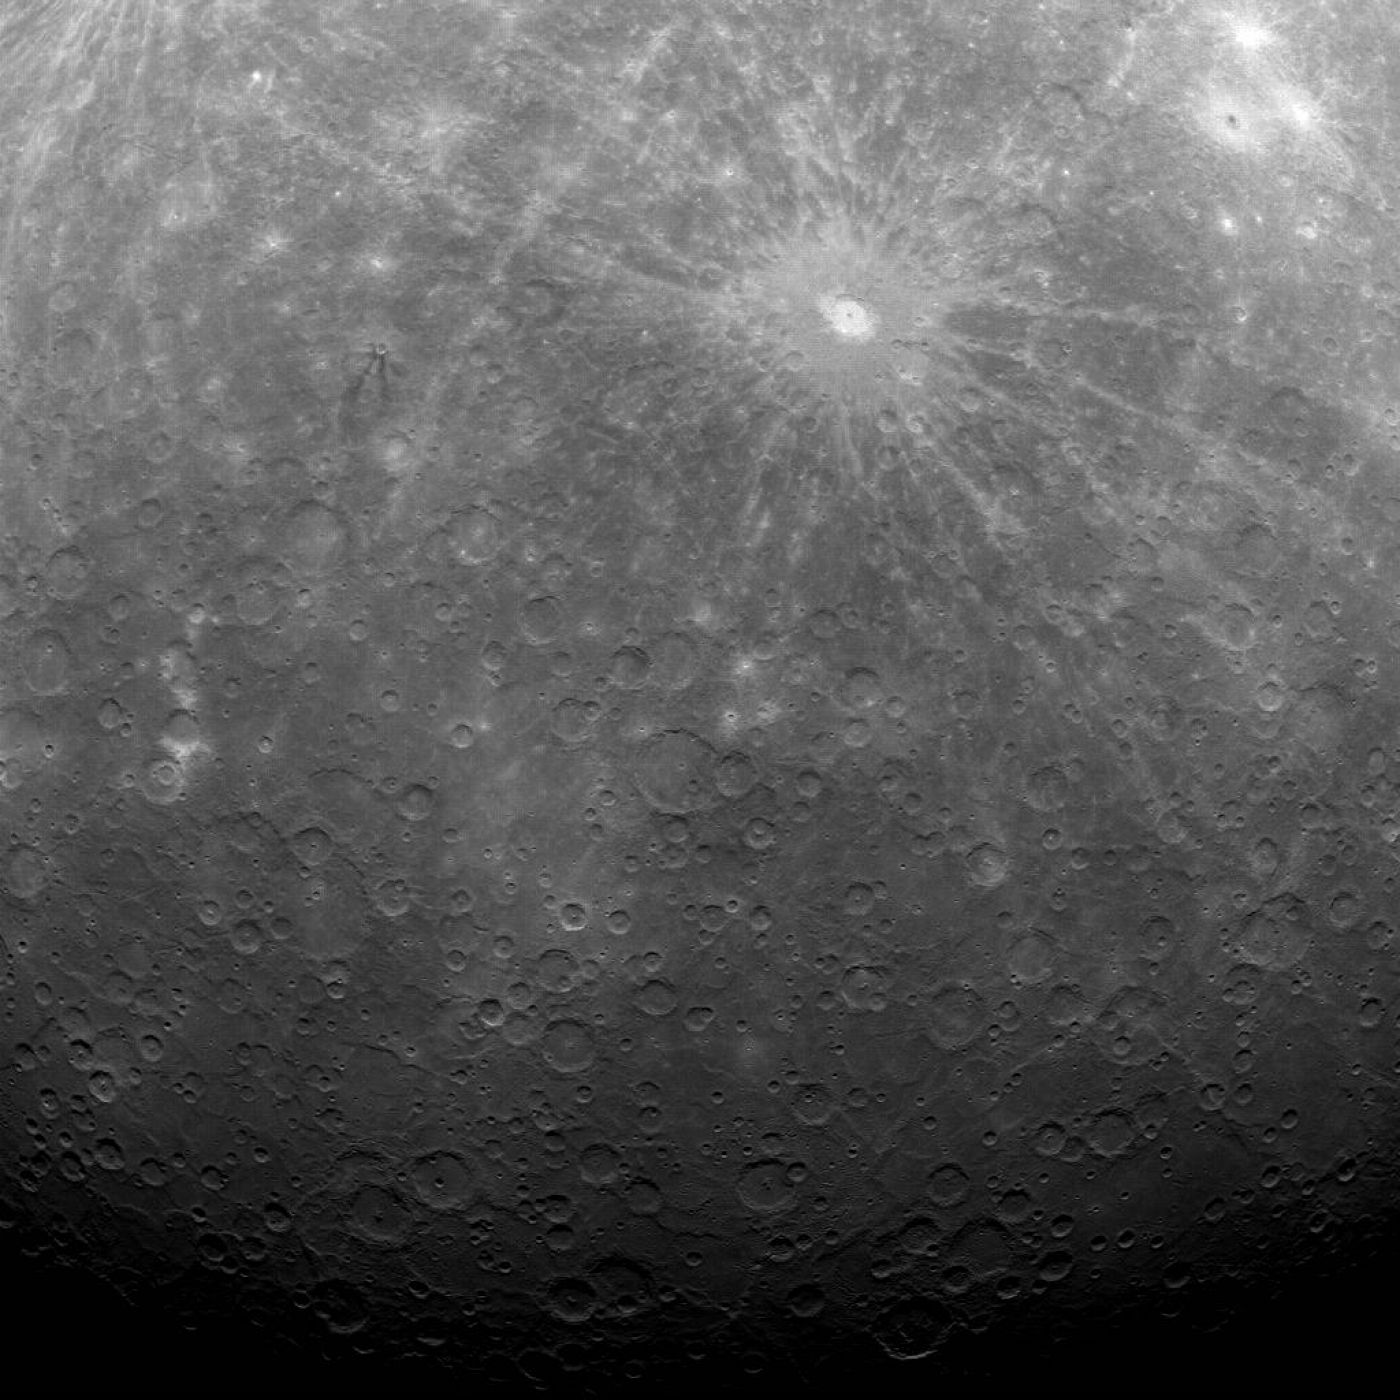 Primera imagen de la superficie de Mercurio obtenida por la sonda Messenger desde la órbita del planeta